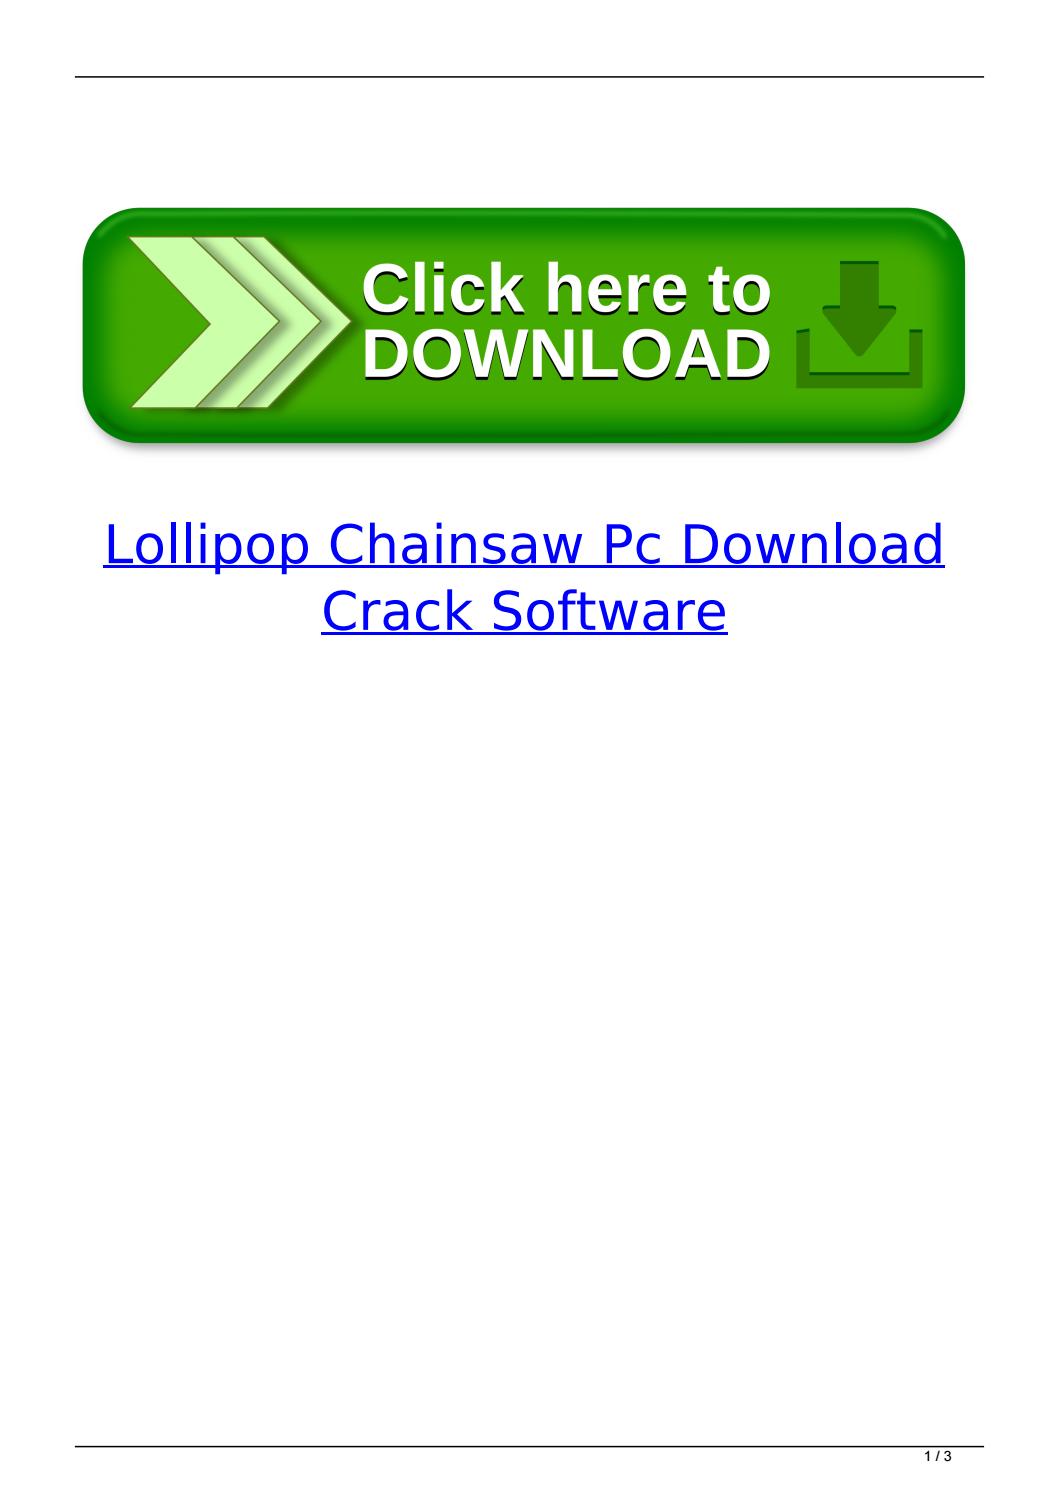 Lollipop Chainsaw Pc Download Crack